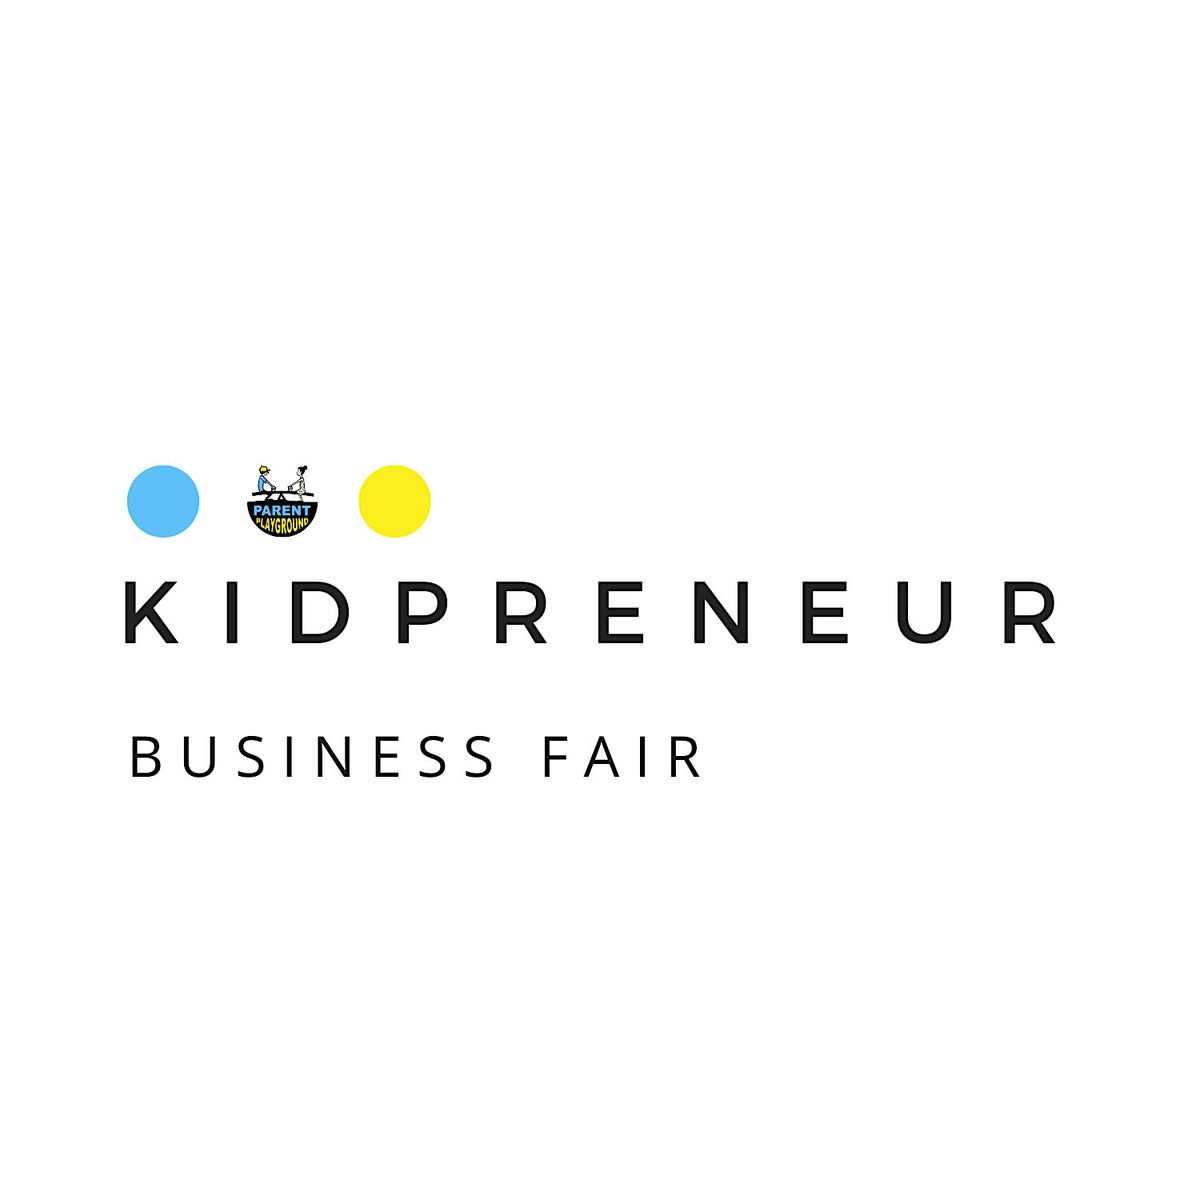 Kidpreneur Business Fair